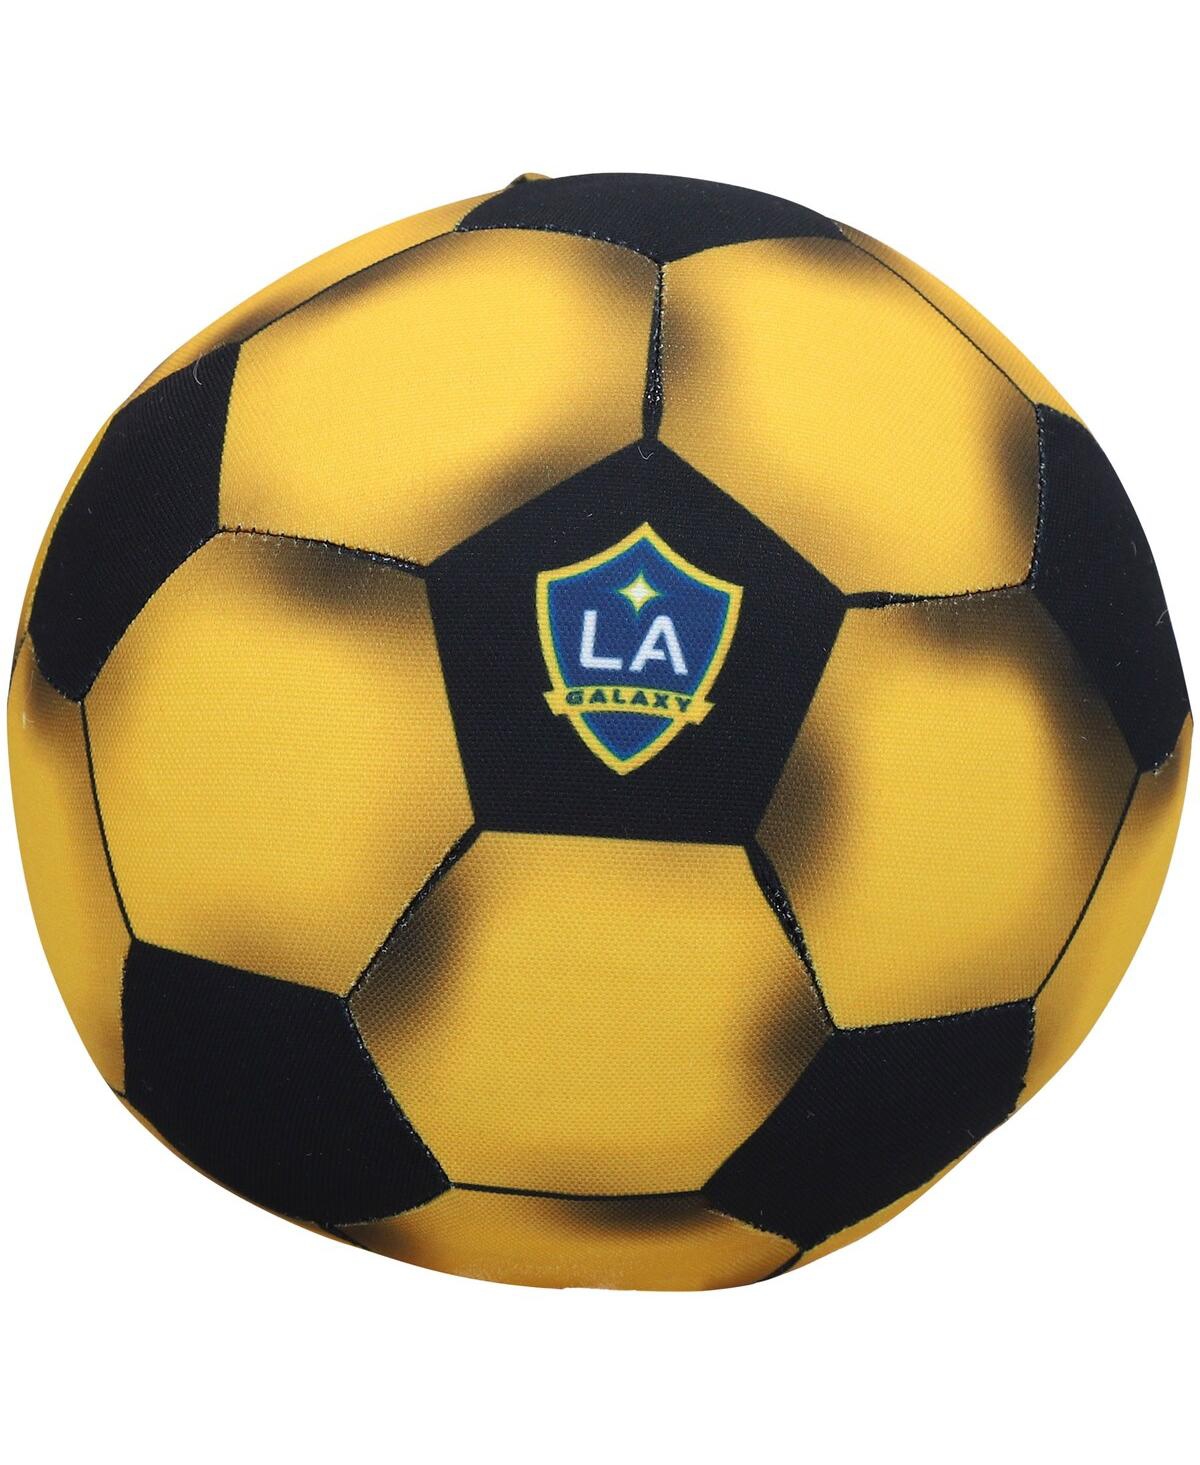 La Galaxy Soccer Ball Plush Dog Toy - Yellow